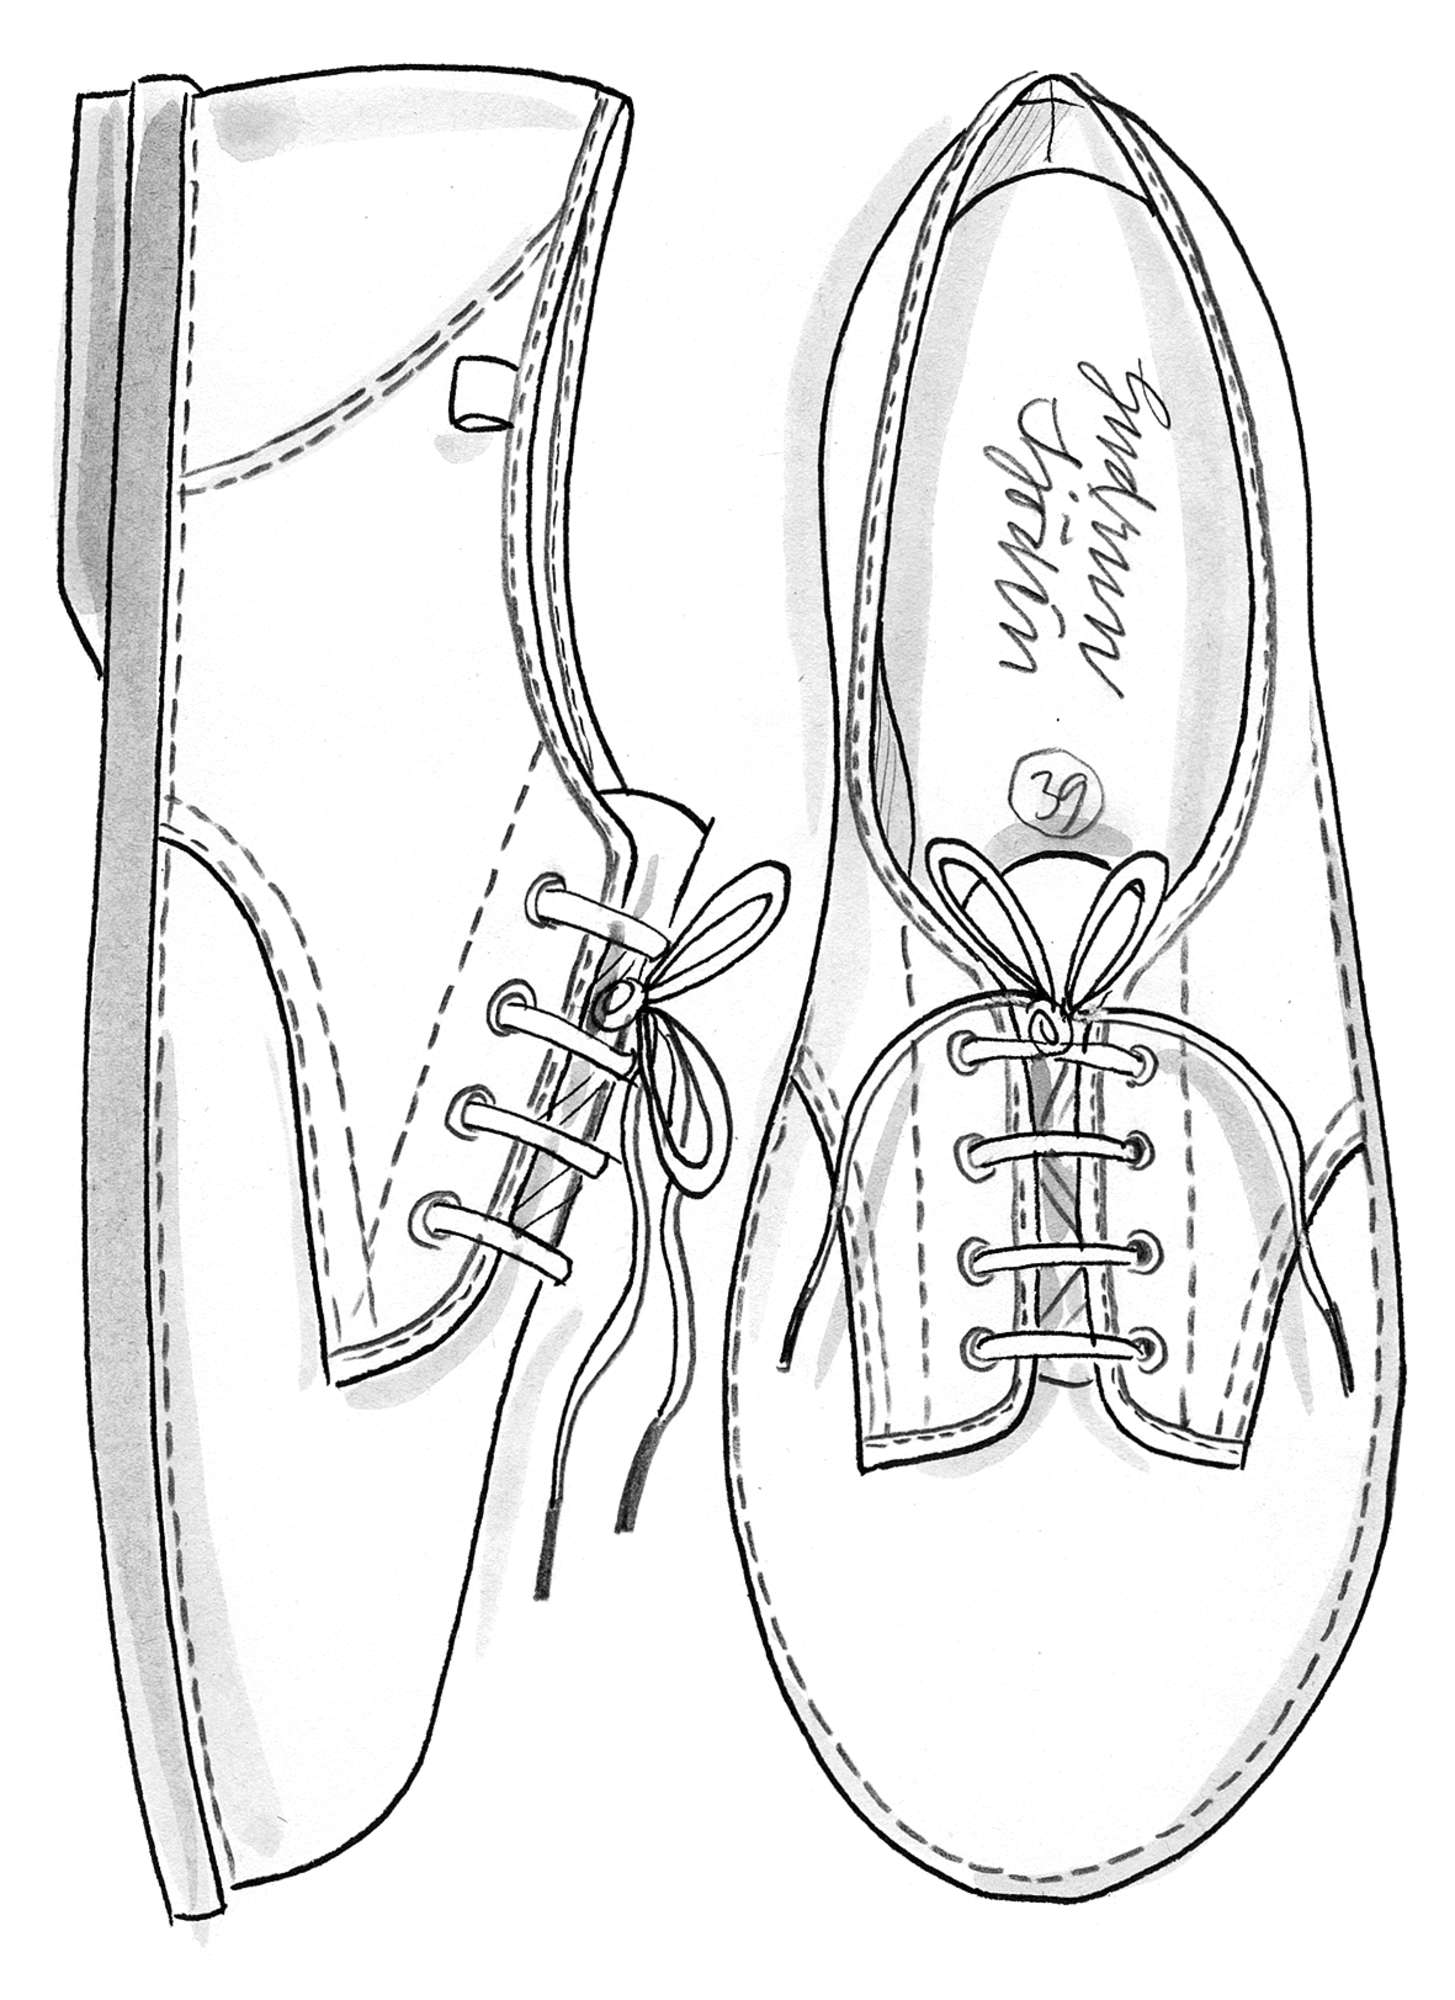 Nappa laceup shoes